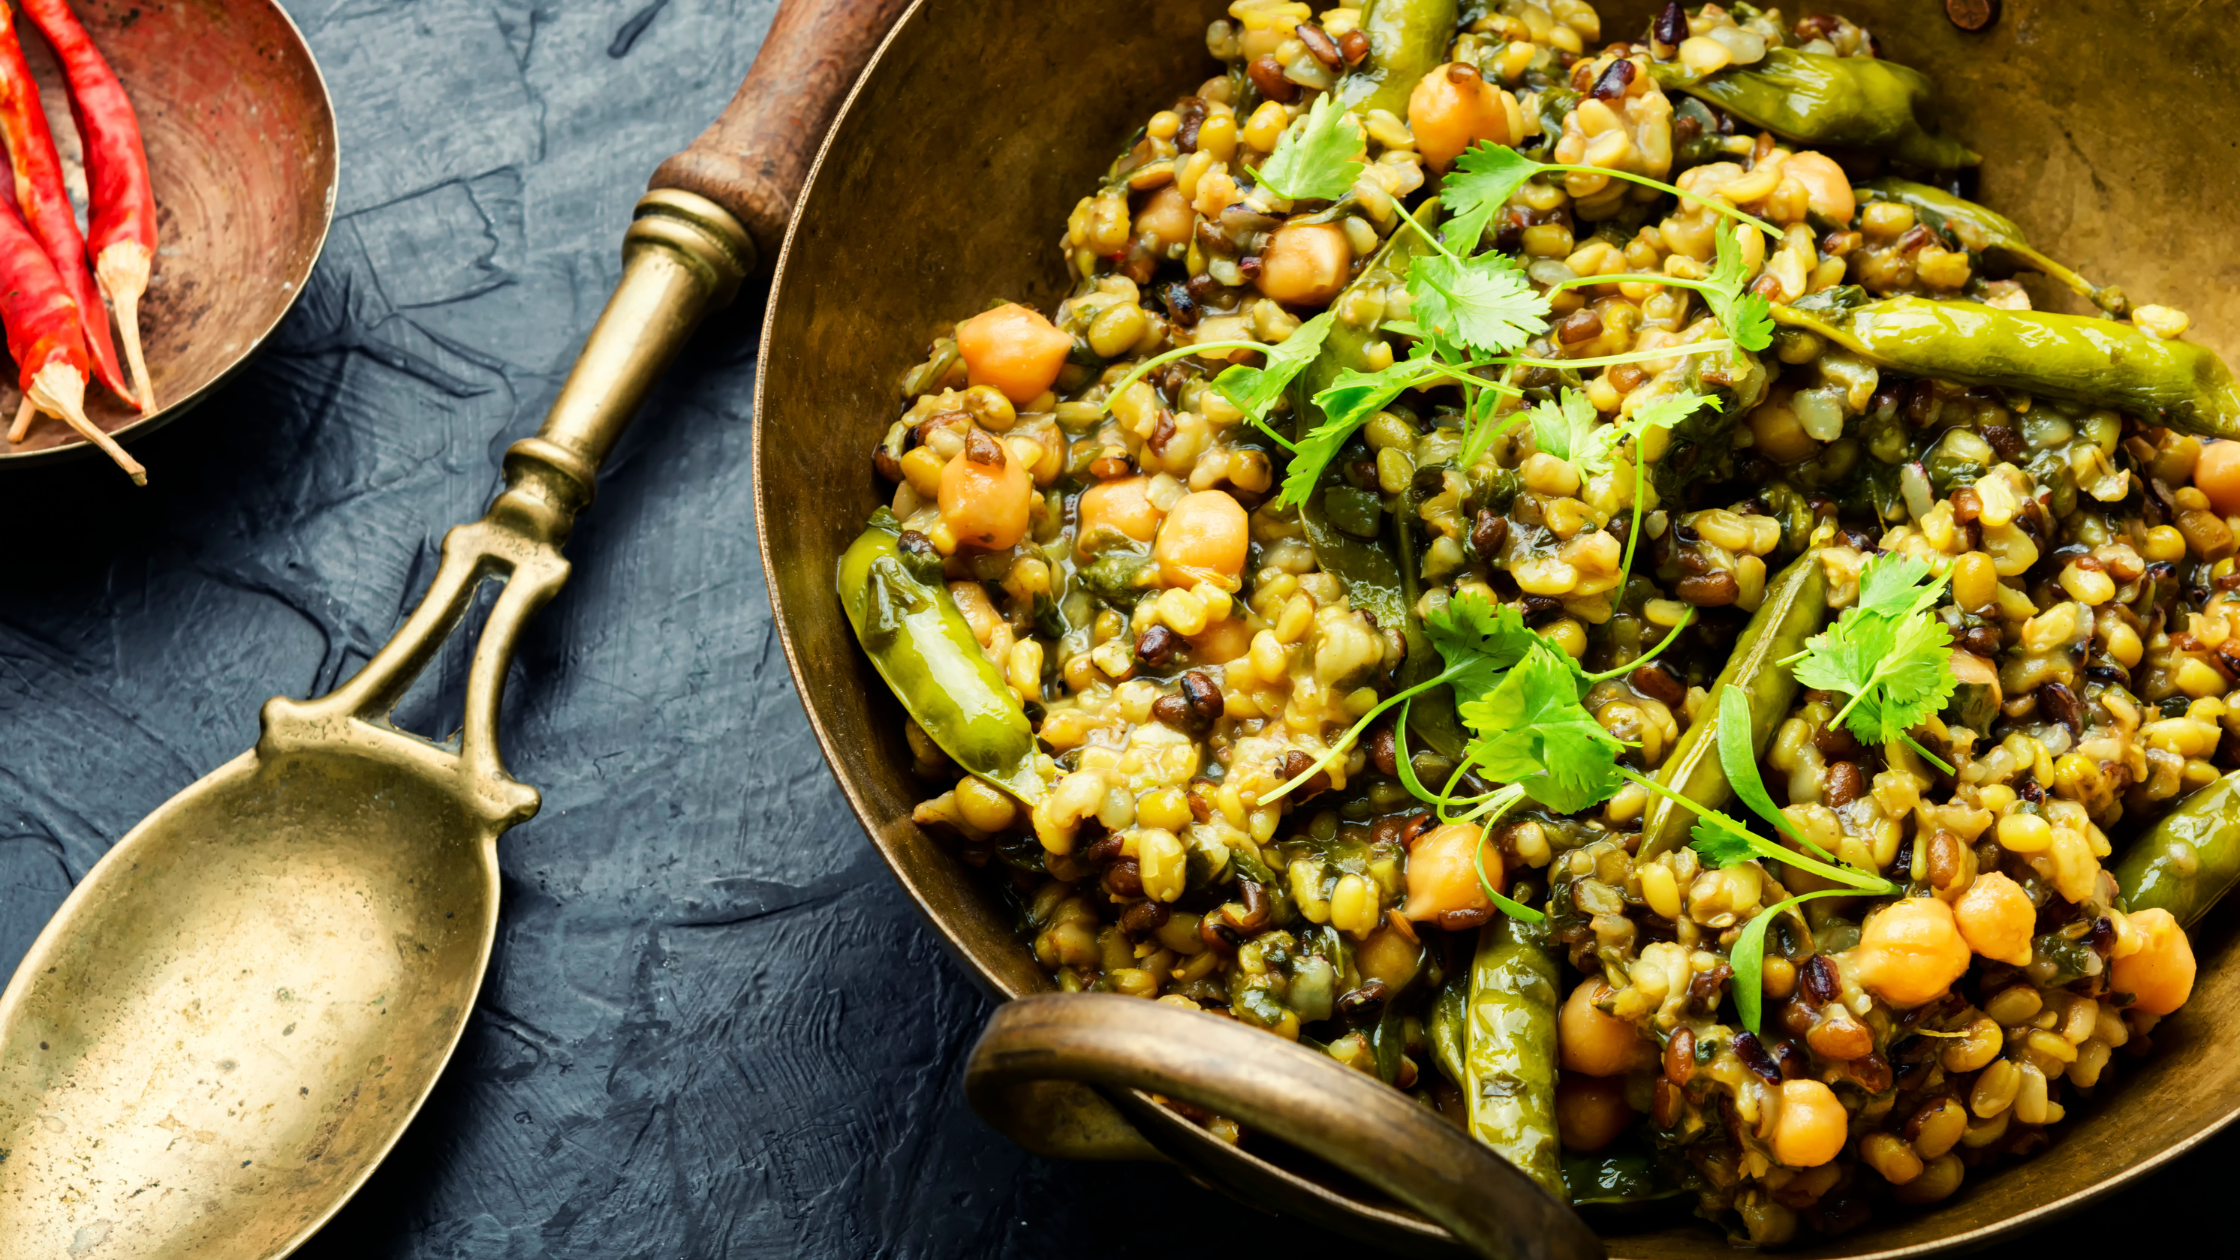 pan of healthy grains and veggies cooking